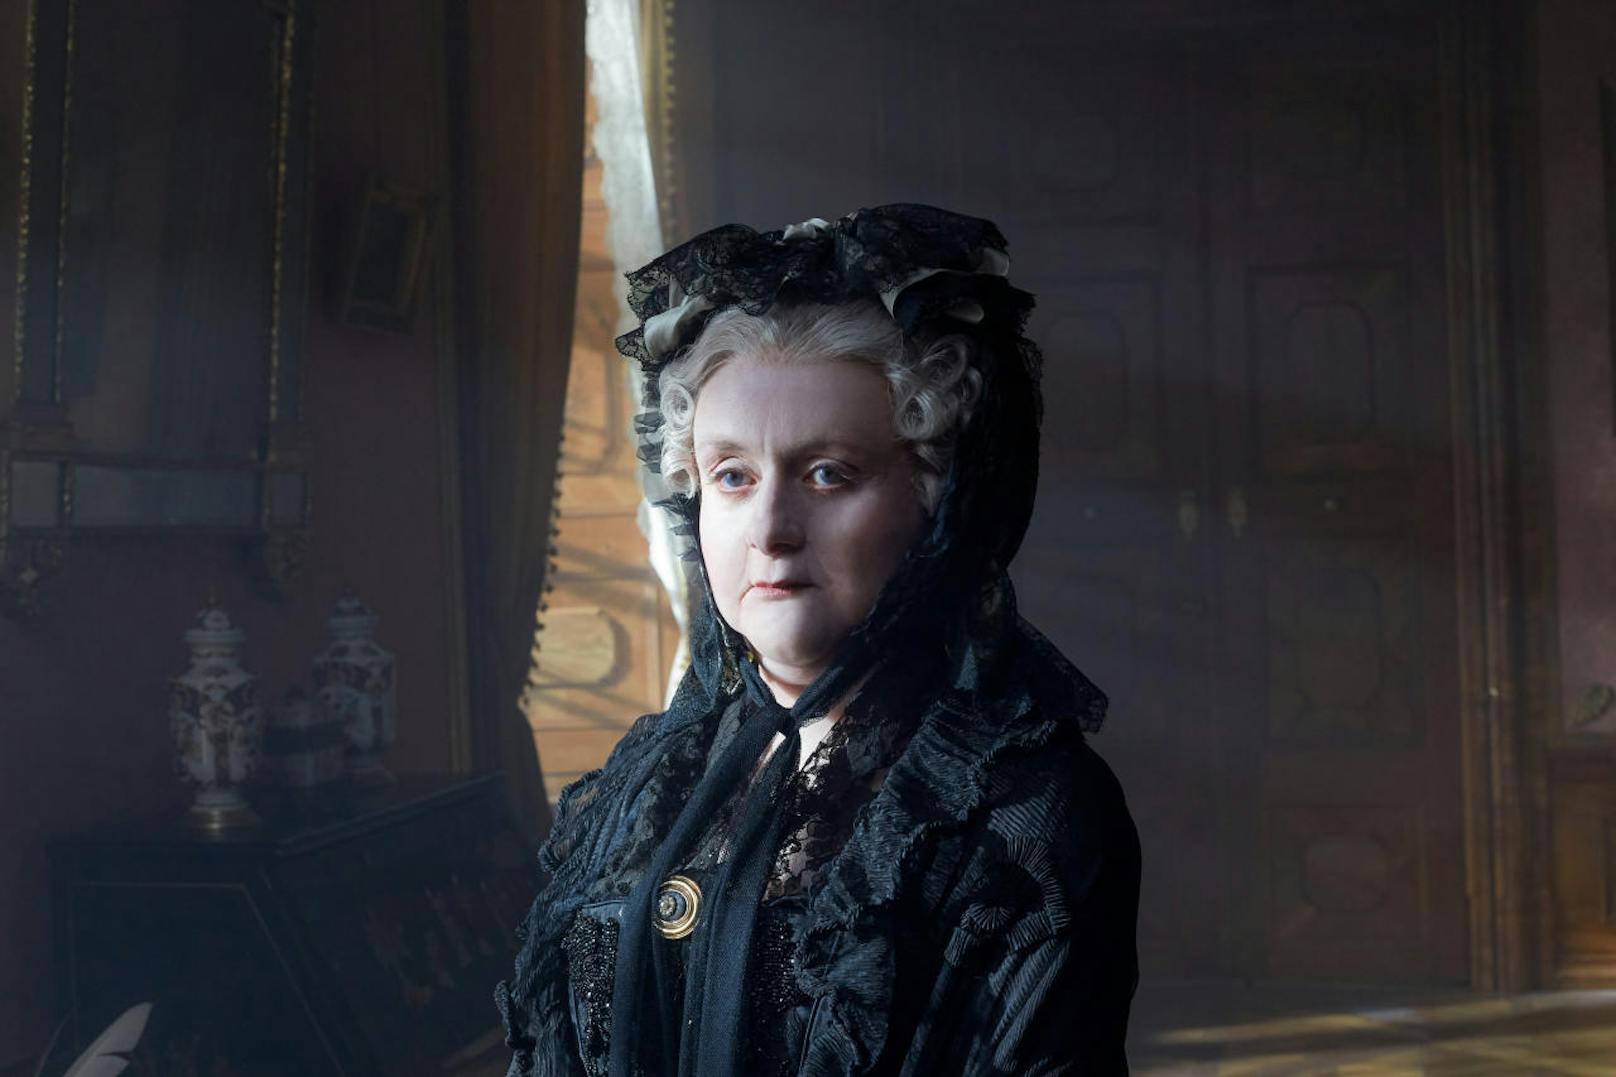 Gerti Drassl als Kaiserin Maria Theresia in der ORF History Dokumentation "Maria Theresia - Majestät und Mutter"